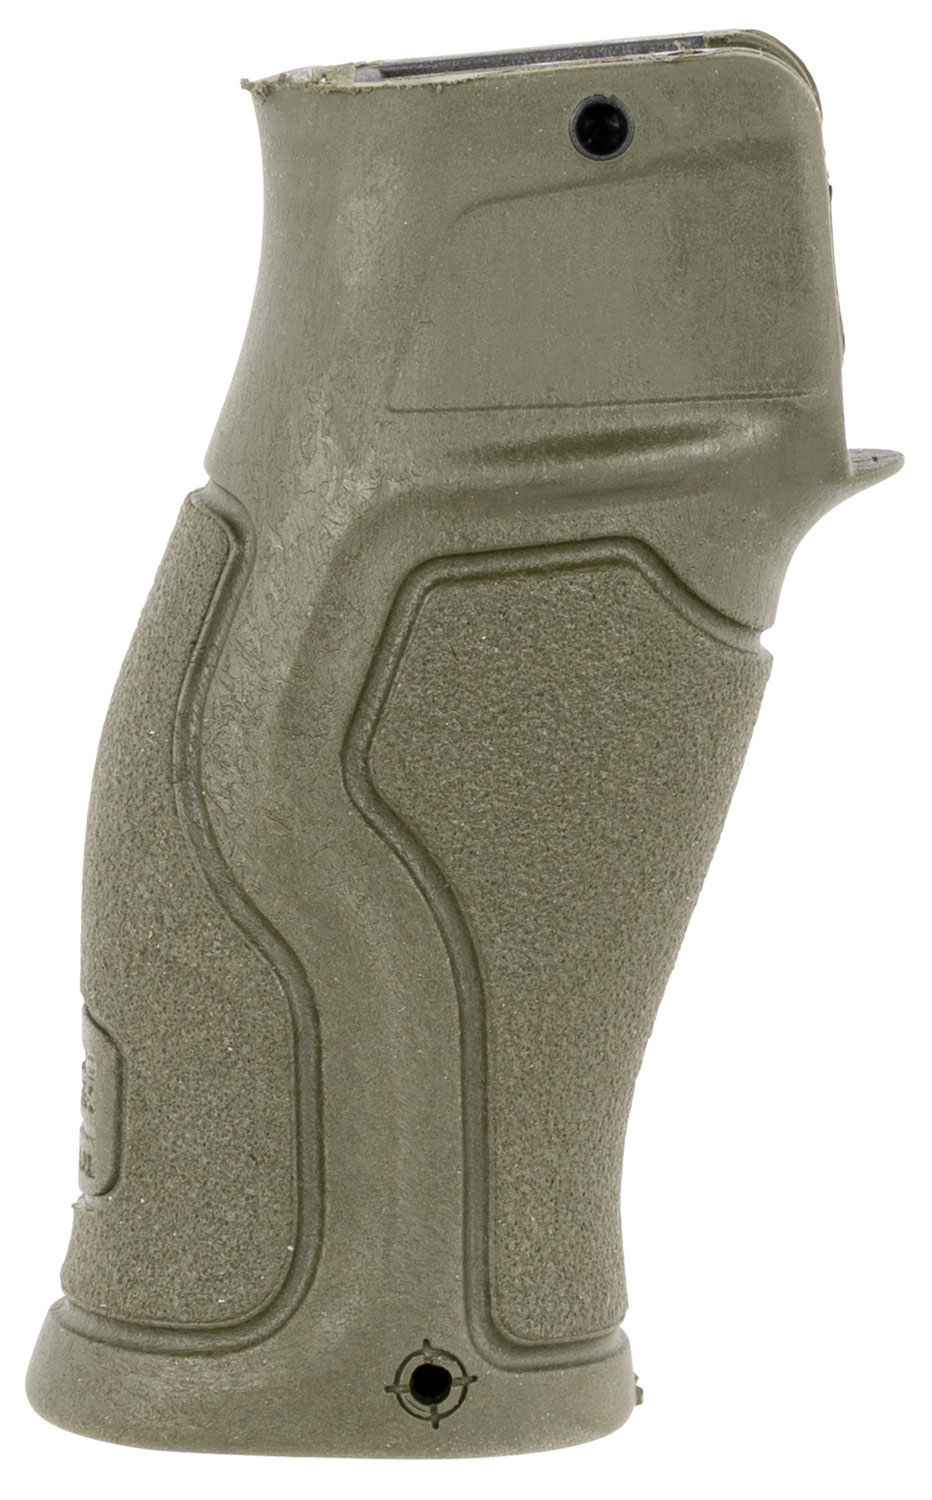 FAB Defense FX-GRADUSFBVG Gradus Ergonomic Pistol Grip Beavertail OD Green Polymer with Rubber Overmold for AR-15, AR-10, M16, M4